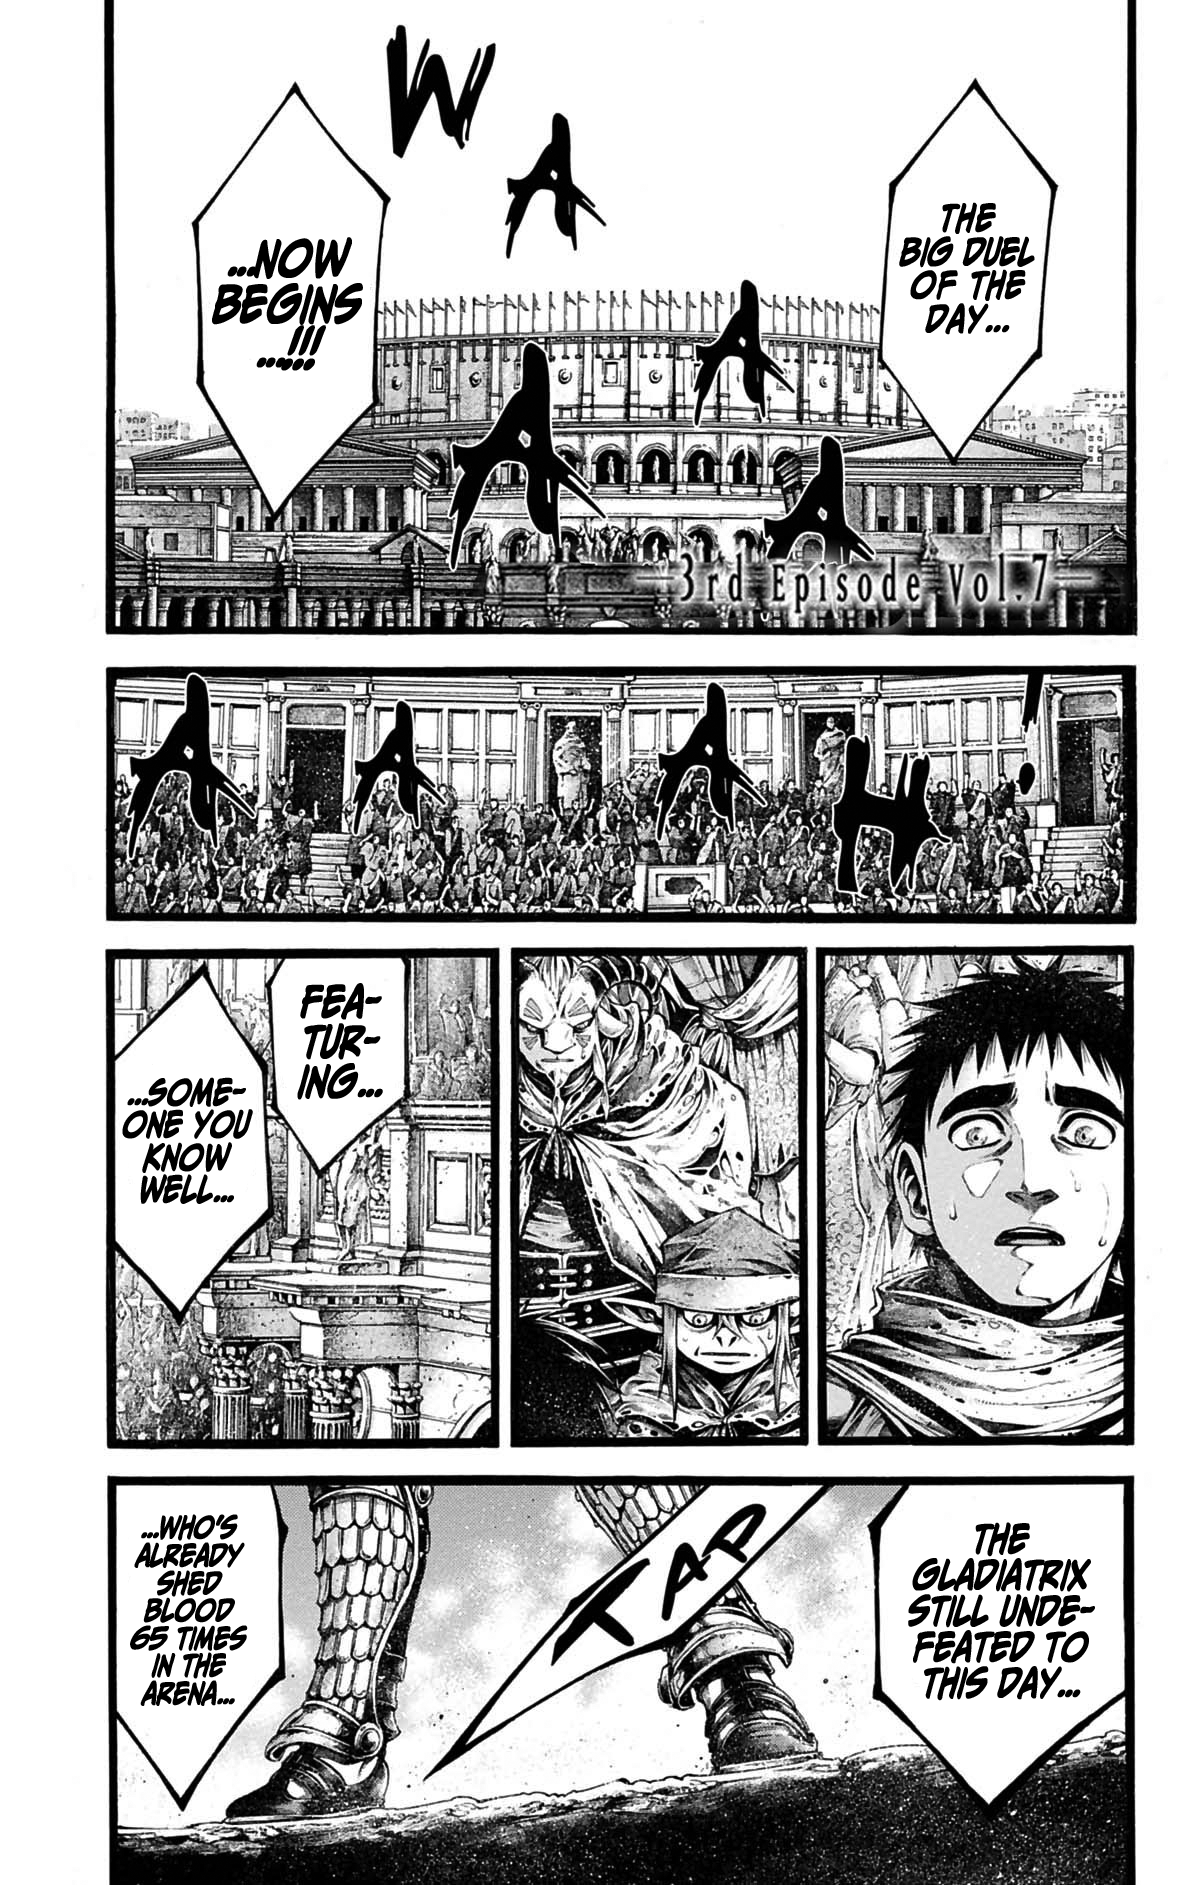 Toujuushi Bestialious - Page 2